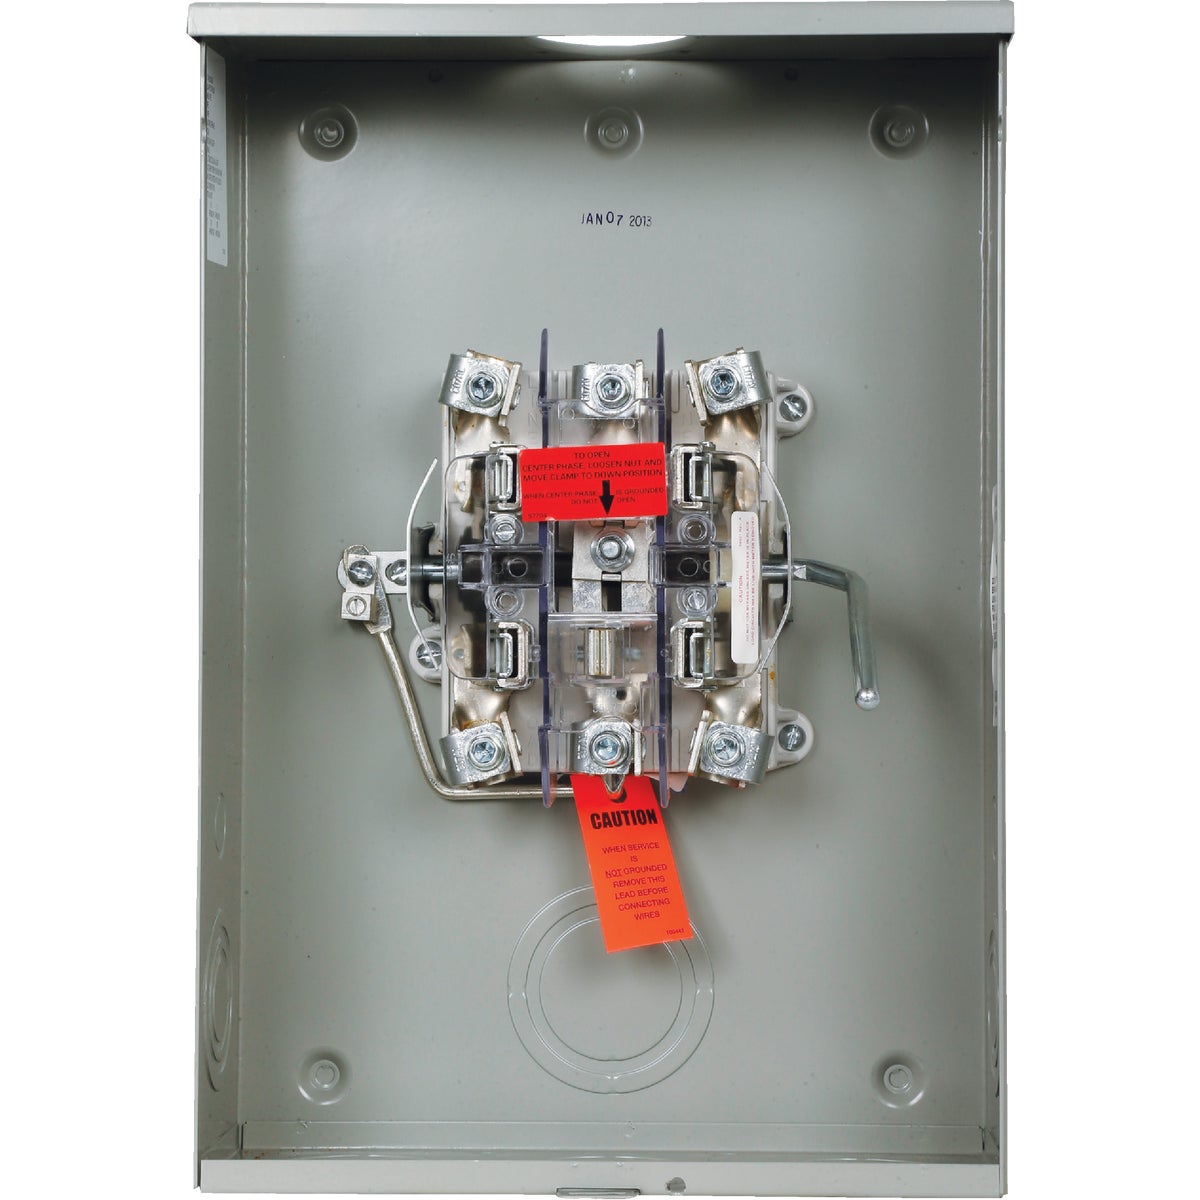 Item 501445, Surface mount outdoor meter socket.